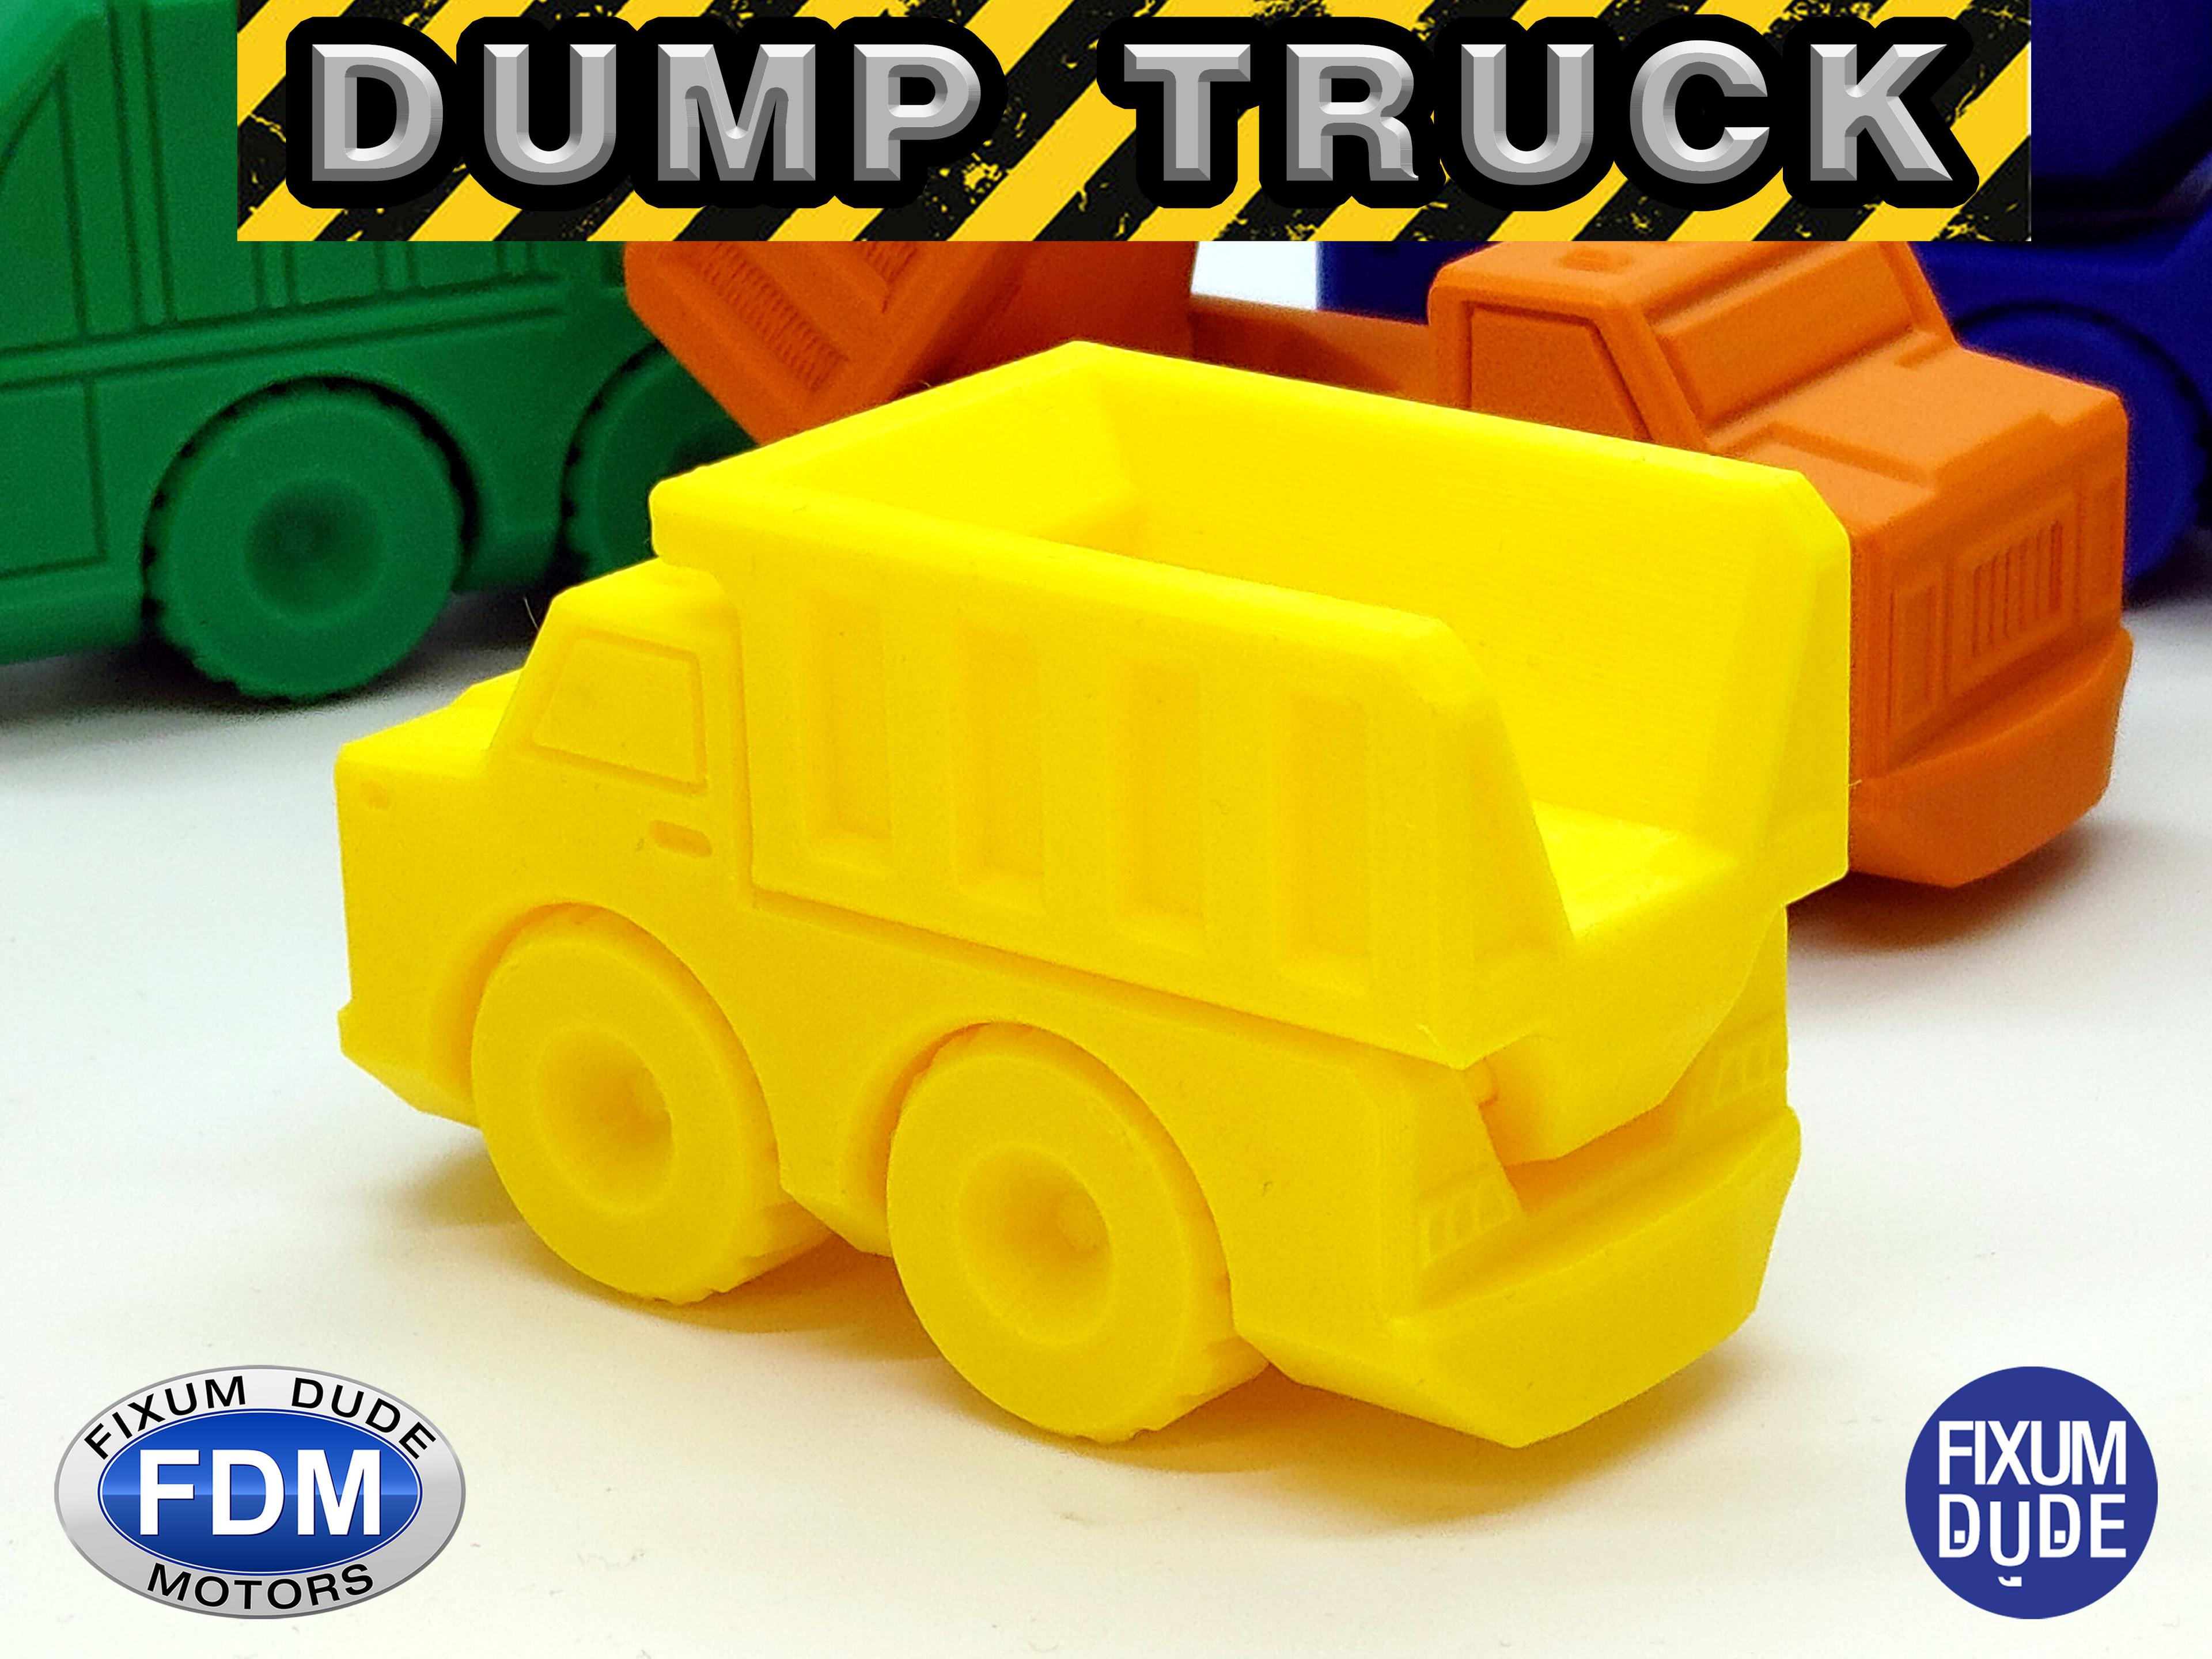 Fixum Dude Motors PiP Dump Truck 3d model